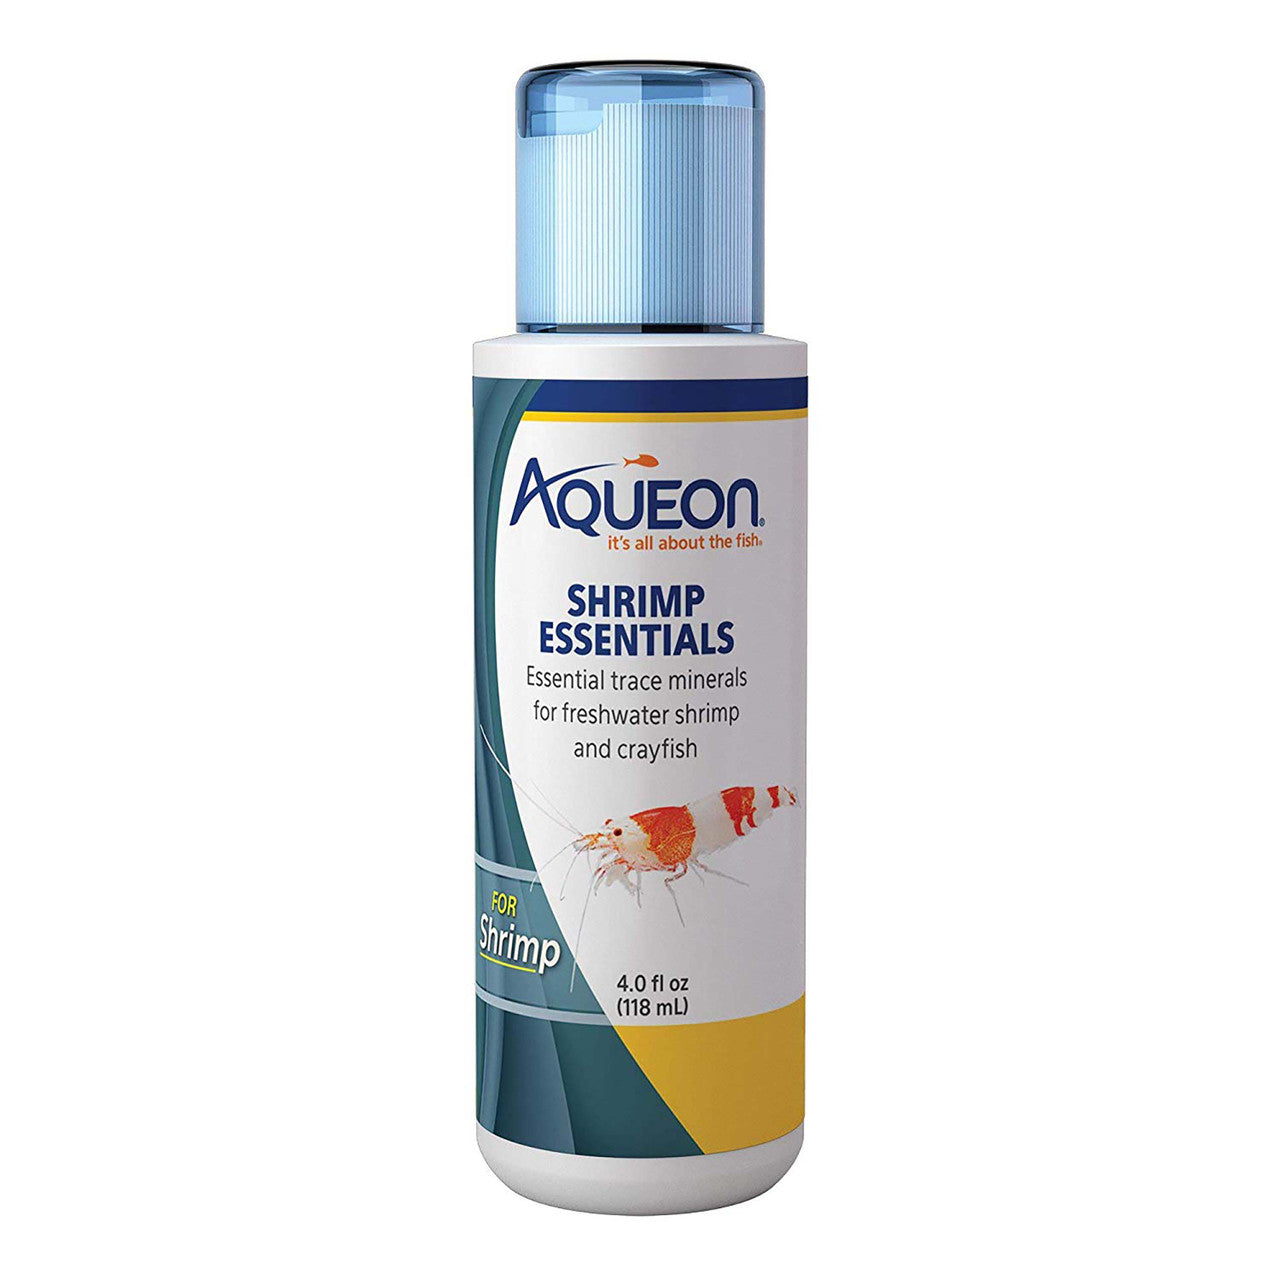 Aqueon Shrimp Essentials 4 Fluid Ounces